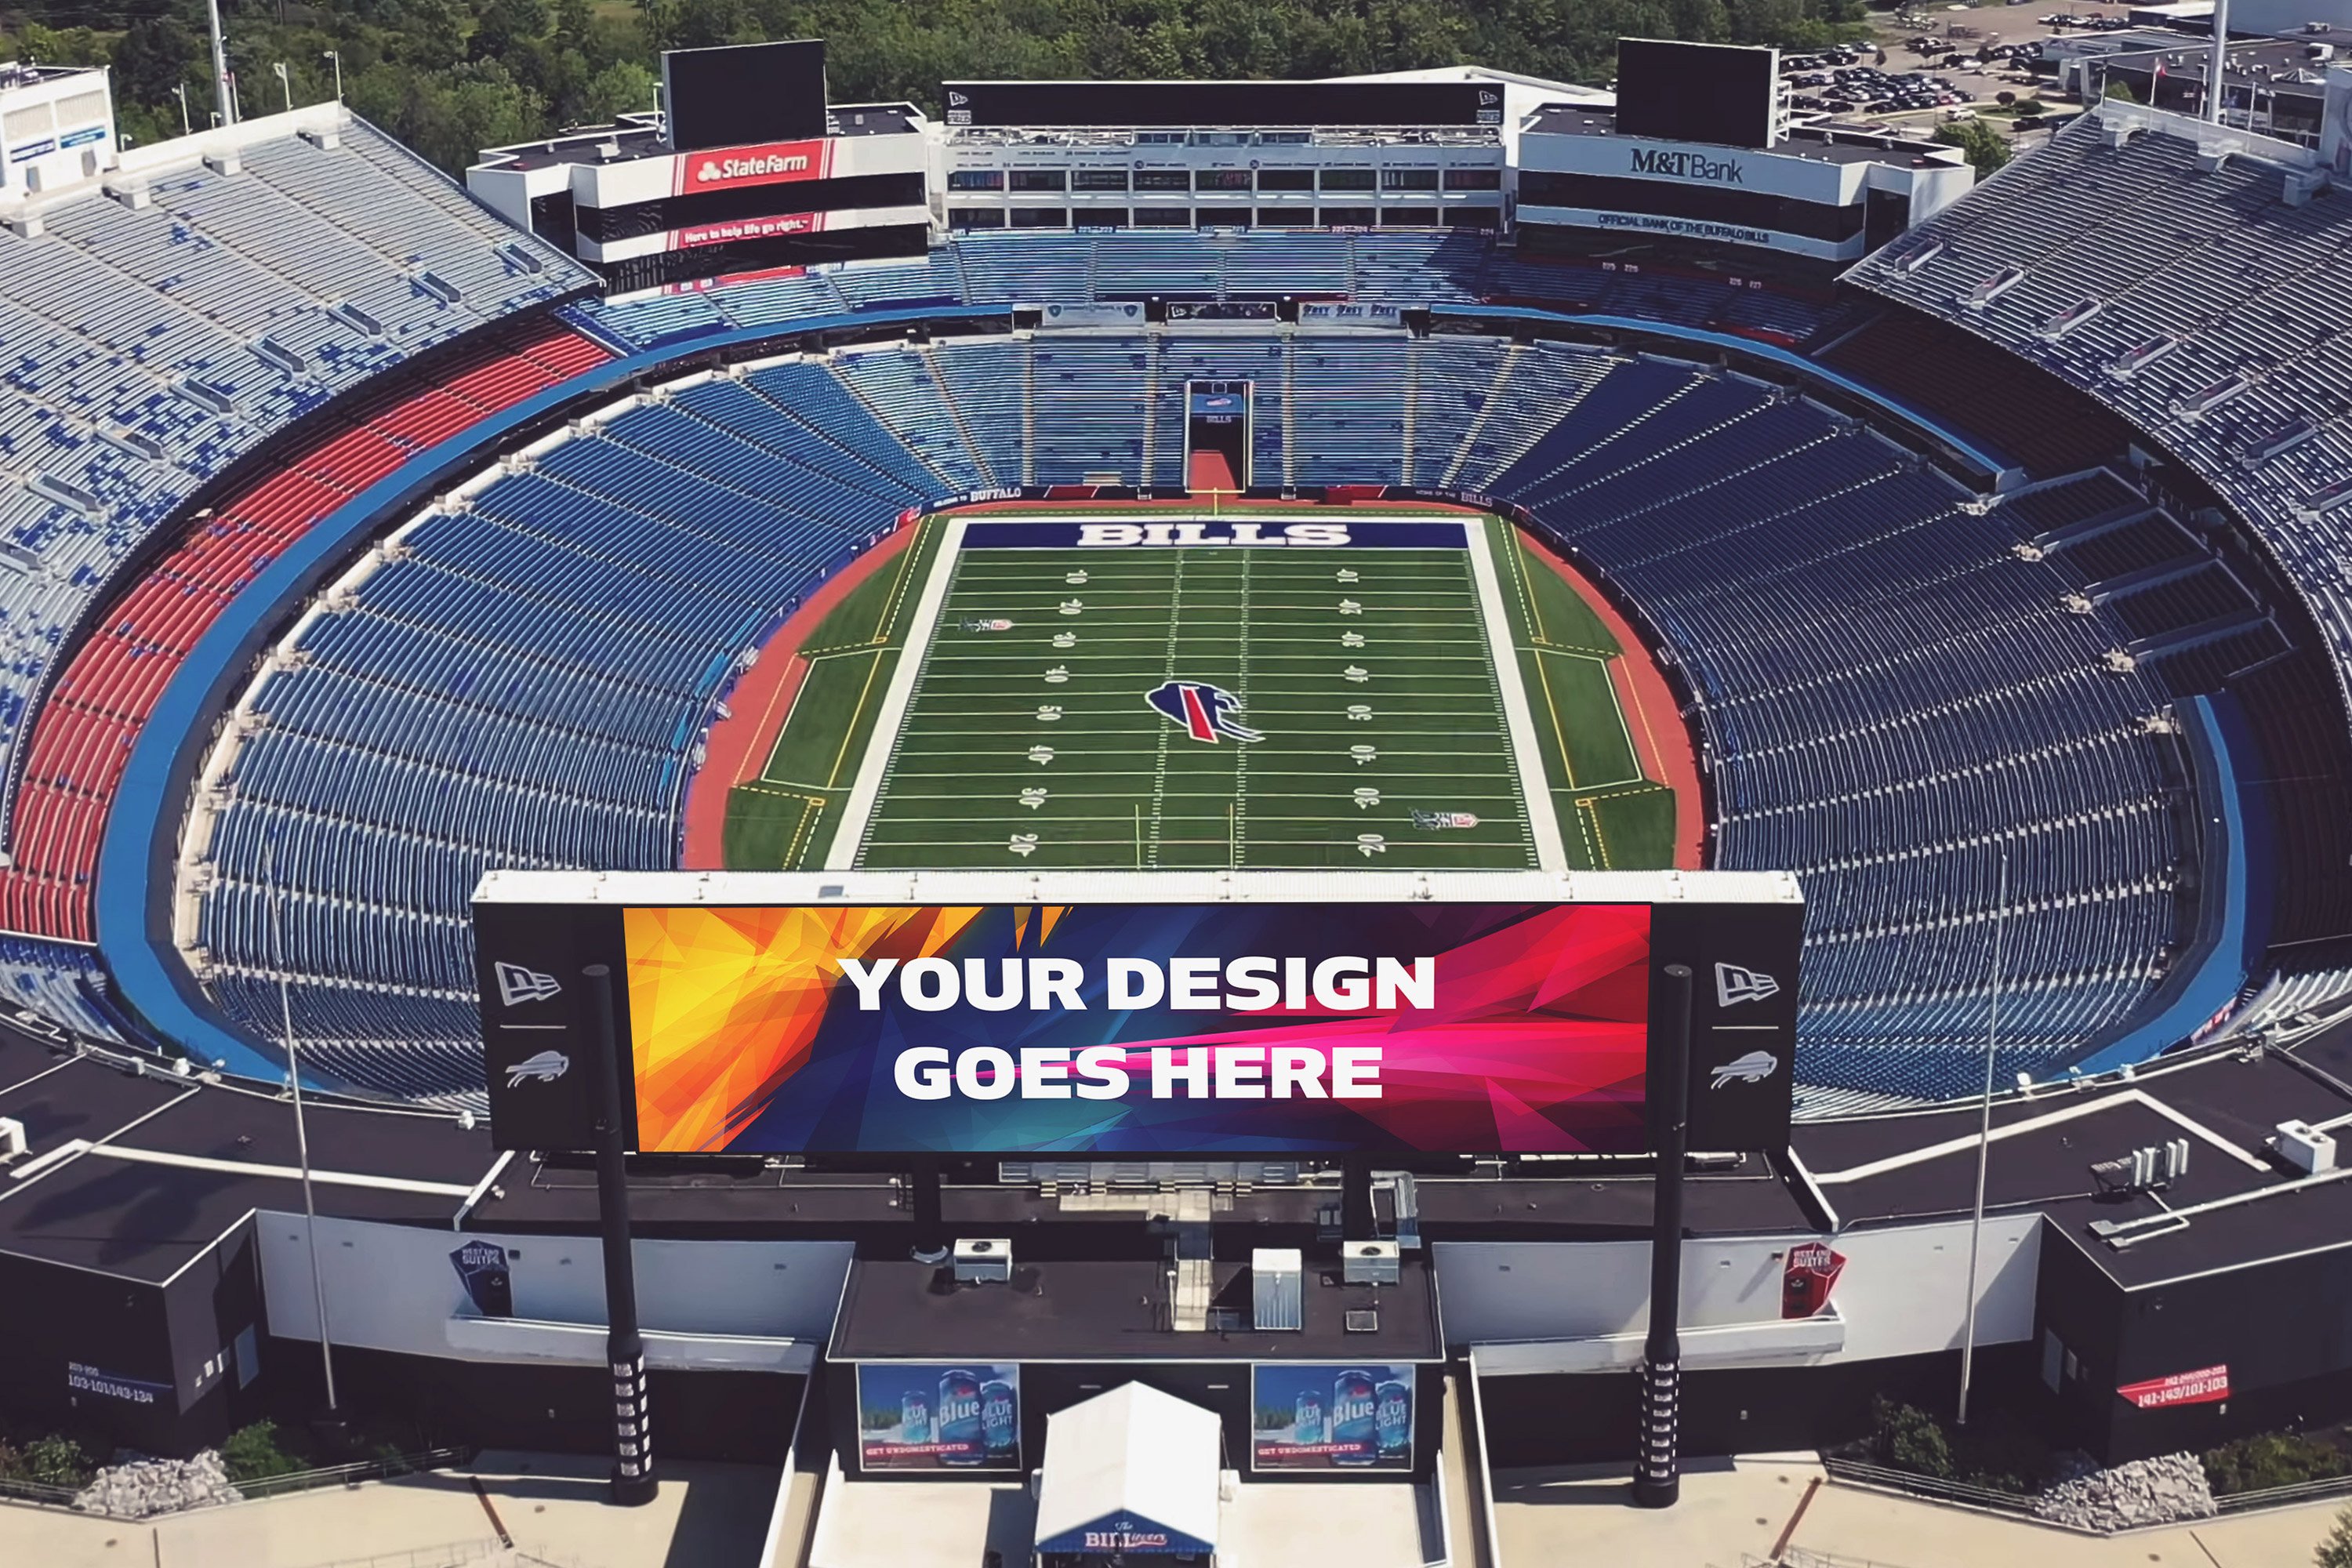 NFL Stadium Display #27 cover image.